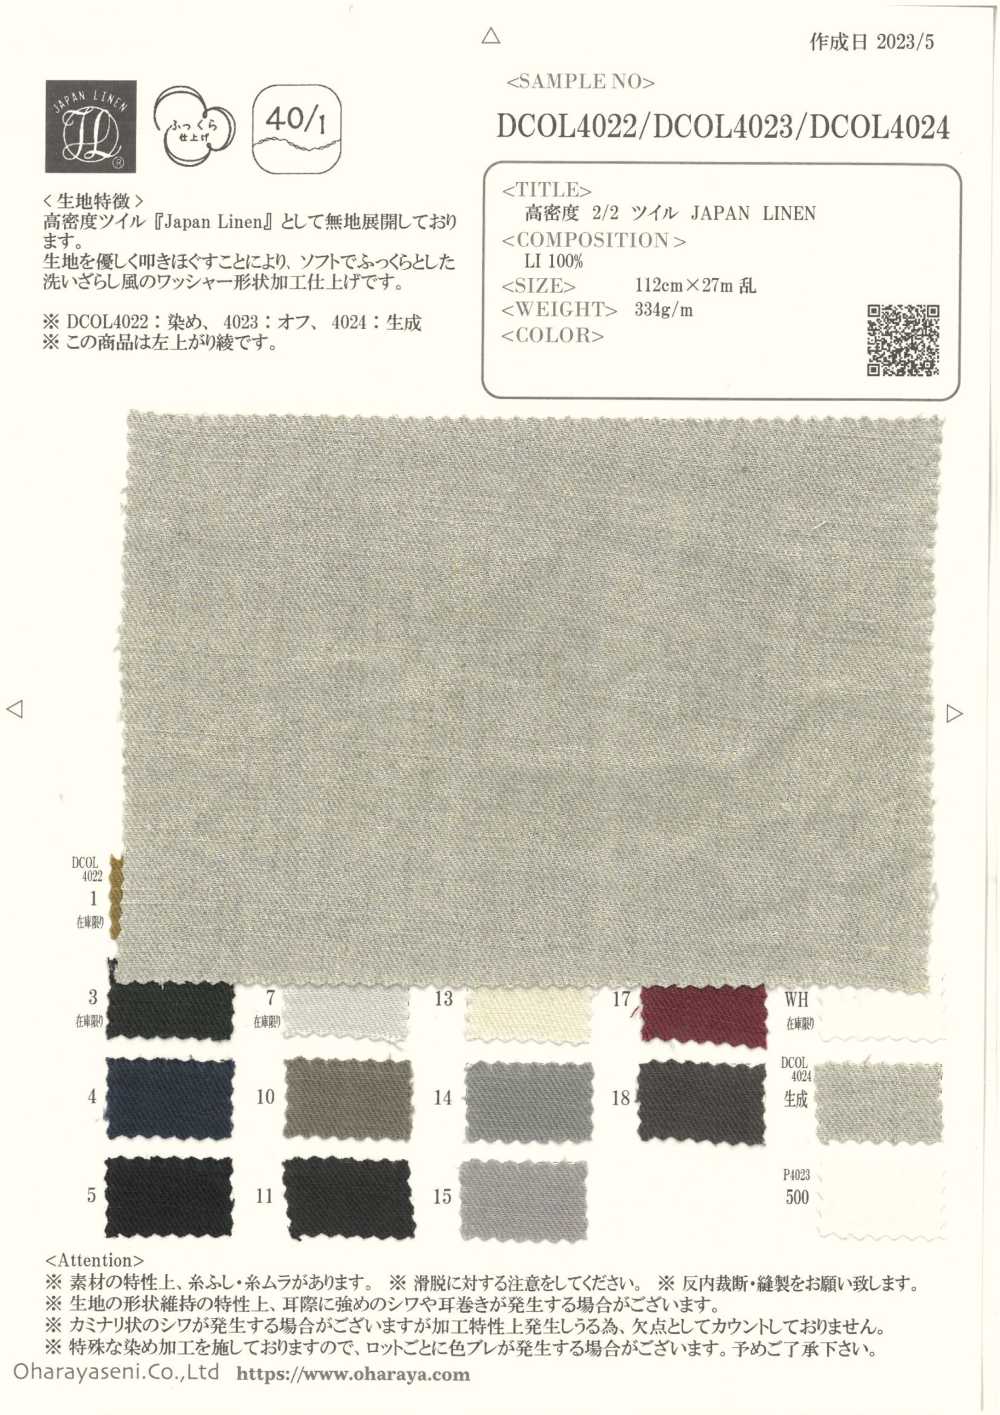 DCOL4024 Hochdichtes 2/2-Twill-JAPAN-LEINEN[Textilgewebe] Oharayaseni